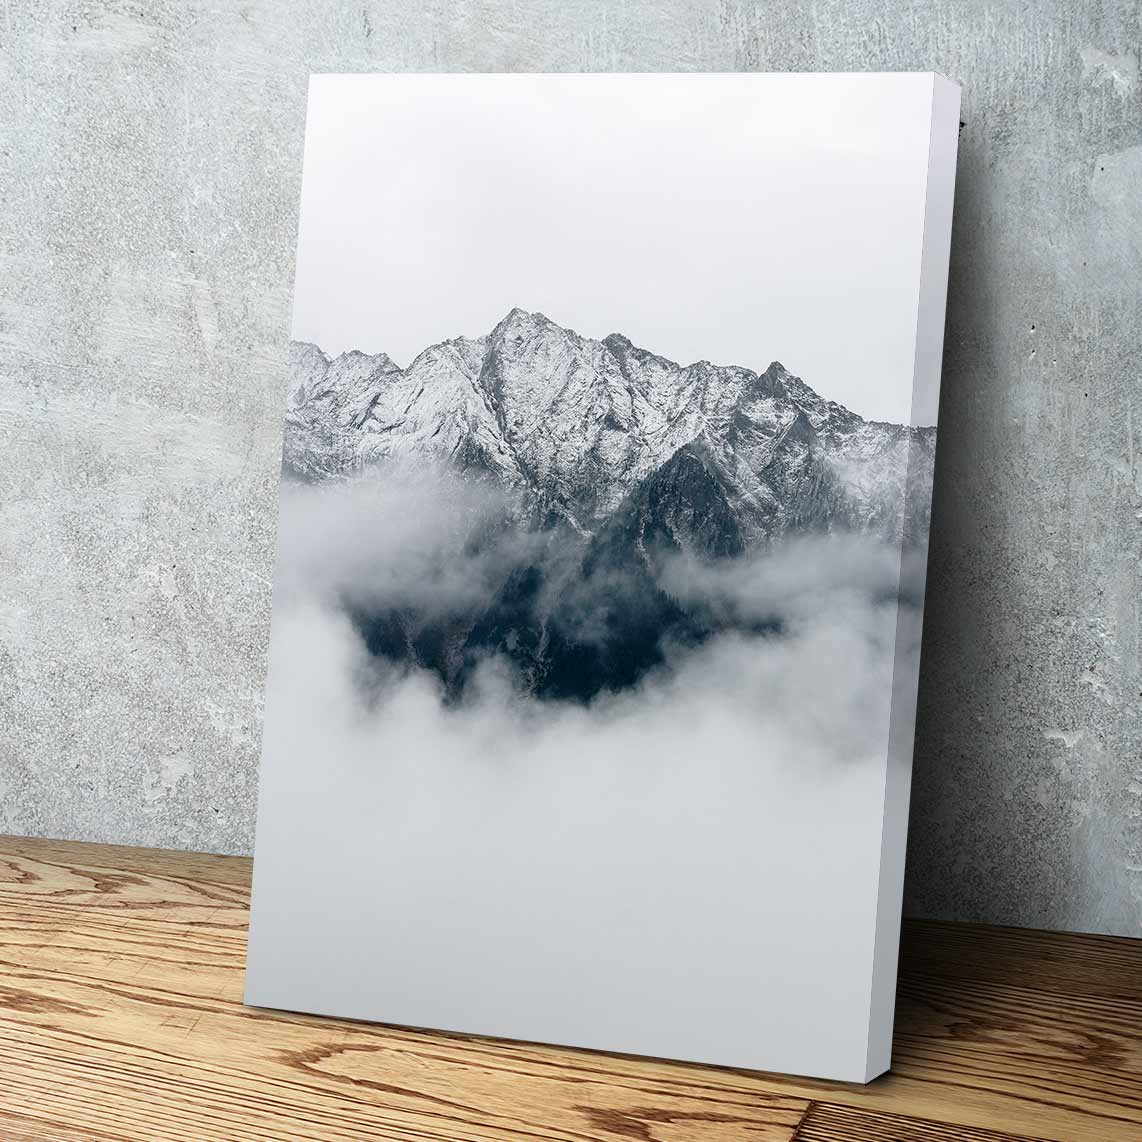 From the Clouds - Snowy Mountain Art by Erberhard Grossgasteiger | Art ...